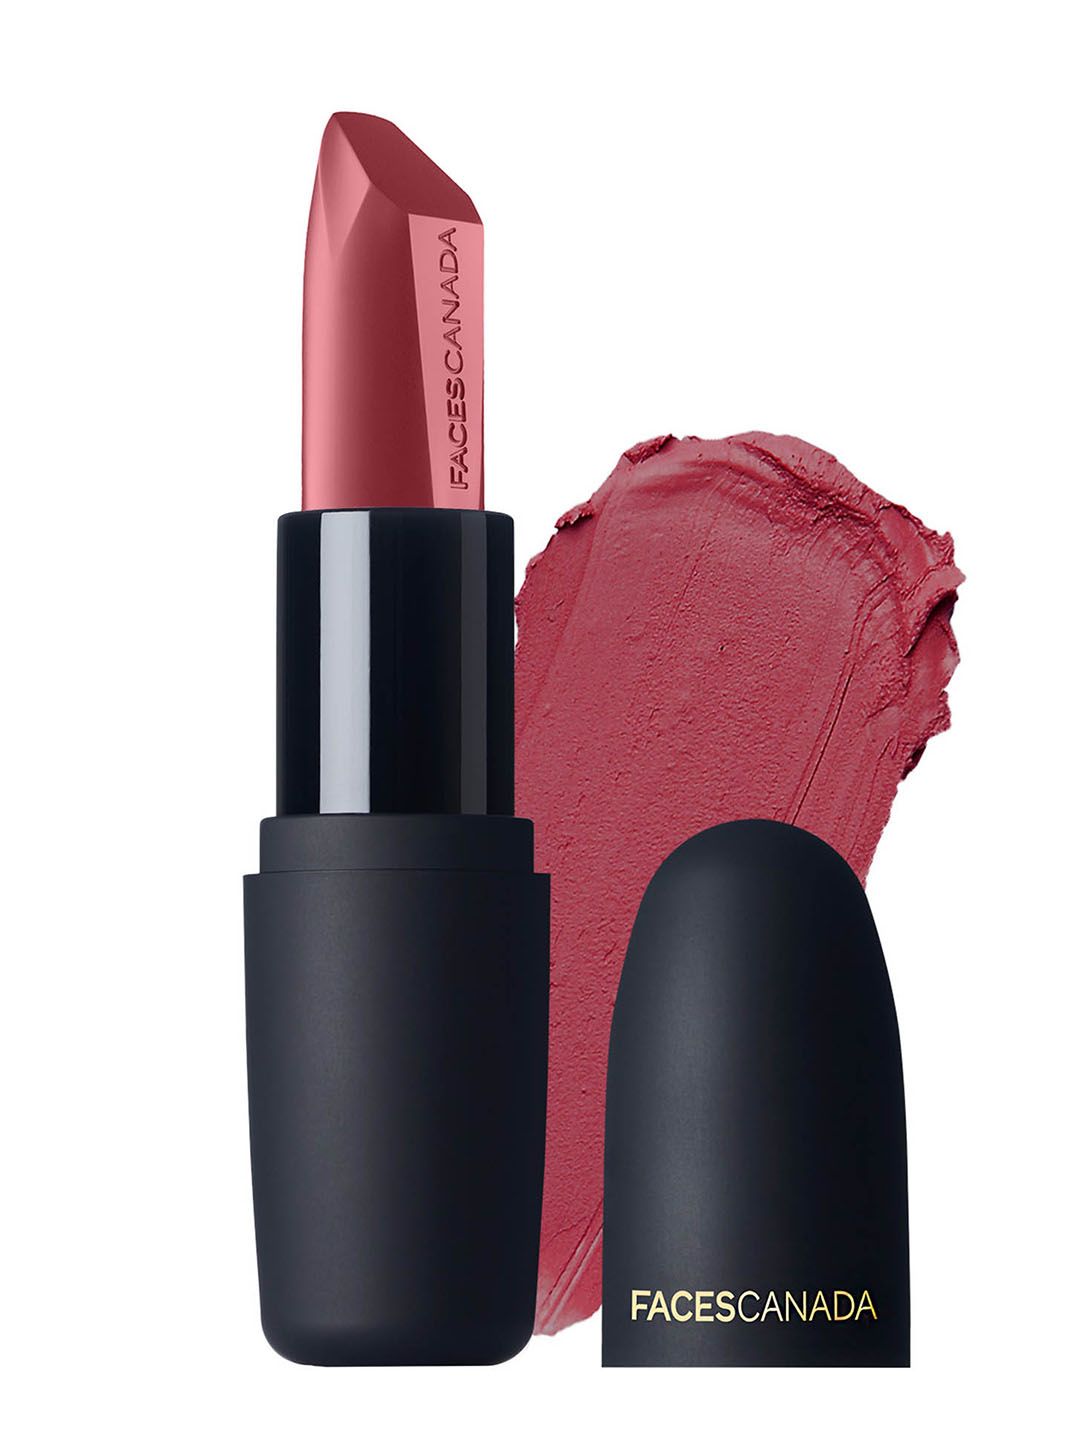 FACES CANADA Weightless Matte Finish Lipstick Fuschia Wave 02 4g Price in India